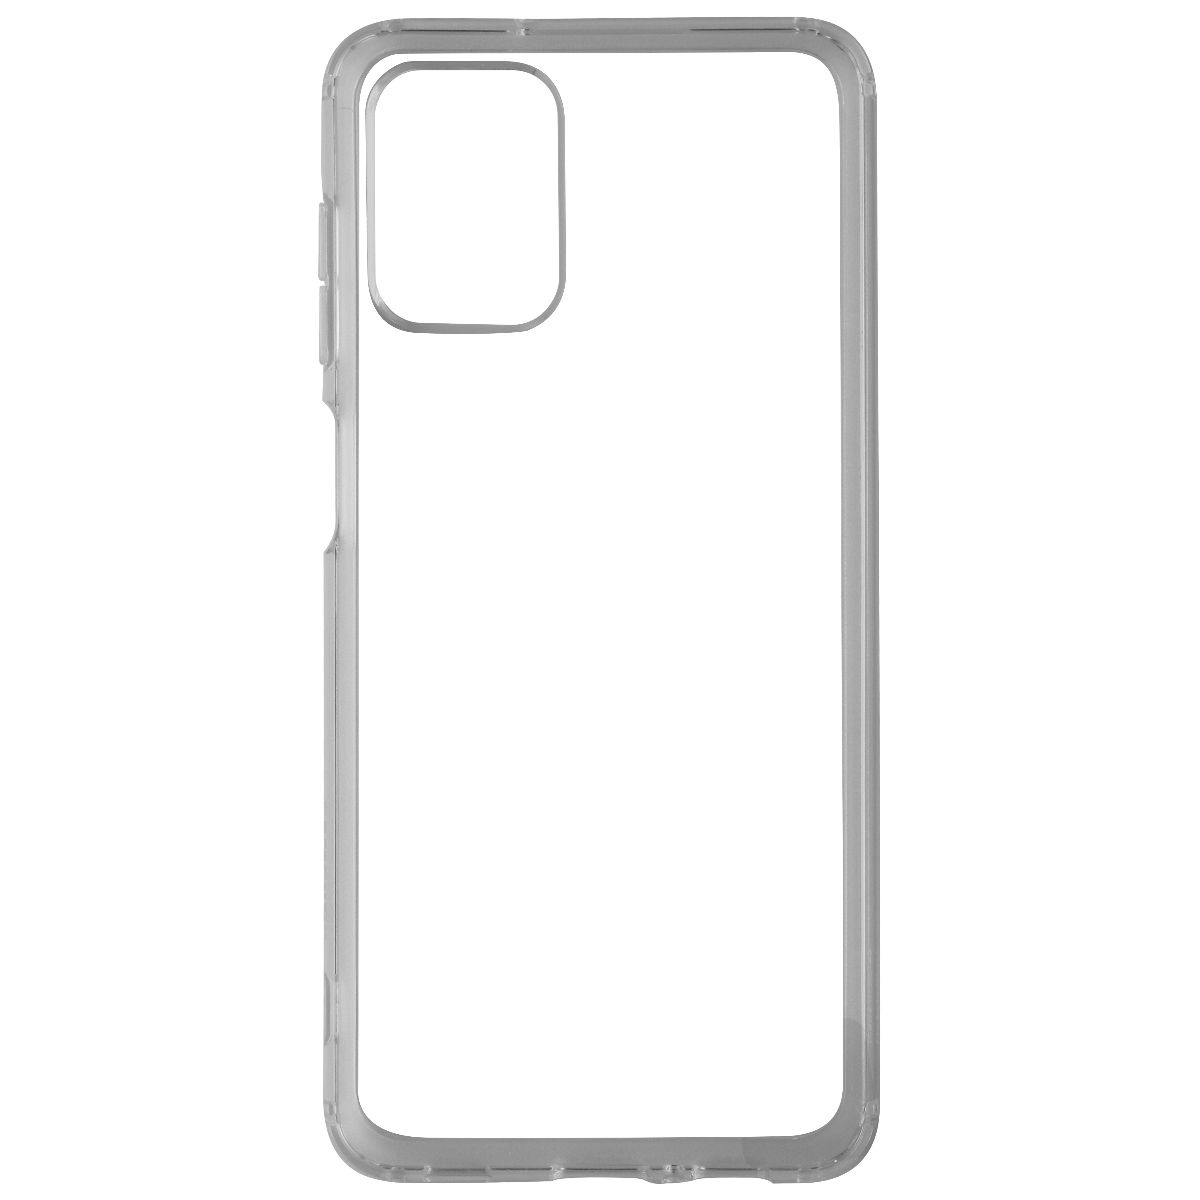 Samsung Soft Clear Cover For Galaxy A12 Smartphones - Clear (EF-QA125TTEVZW)